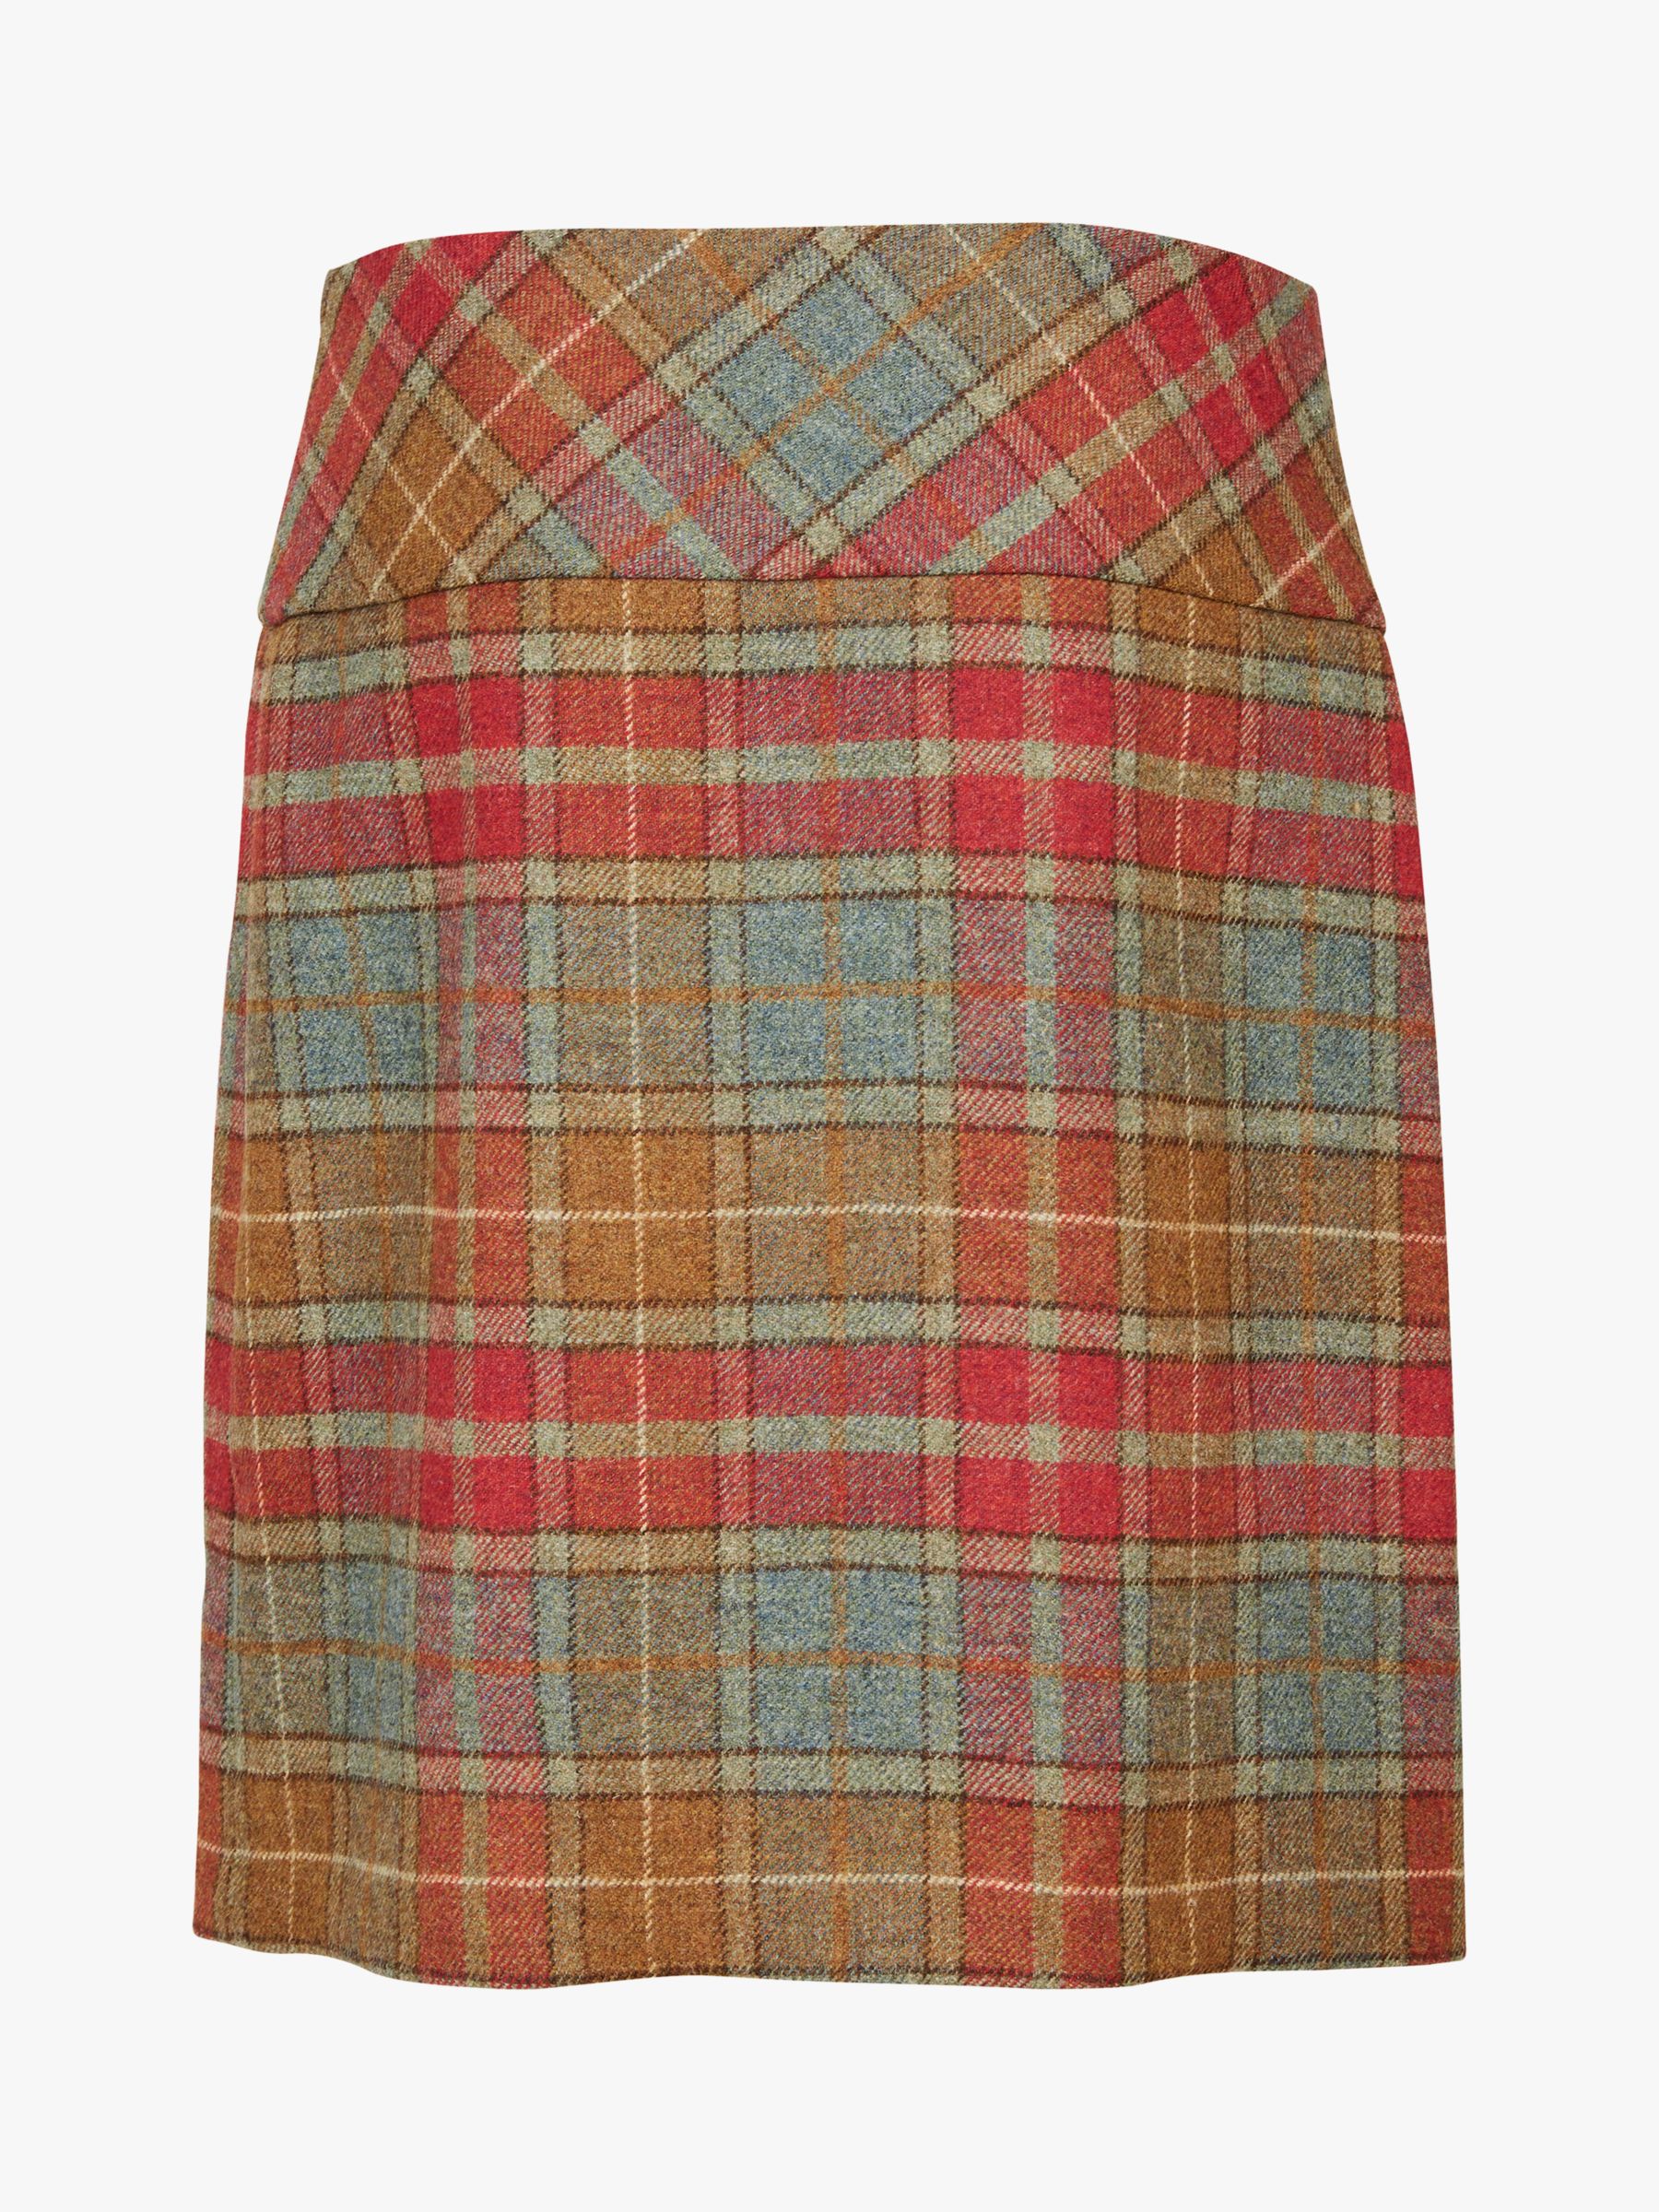 Celtic & Co. The Celt Wool Kilt Skirt, Autumn Tartan, 8